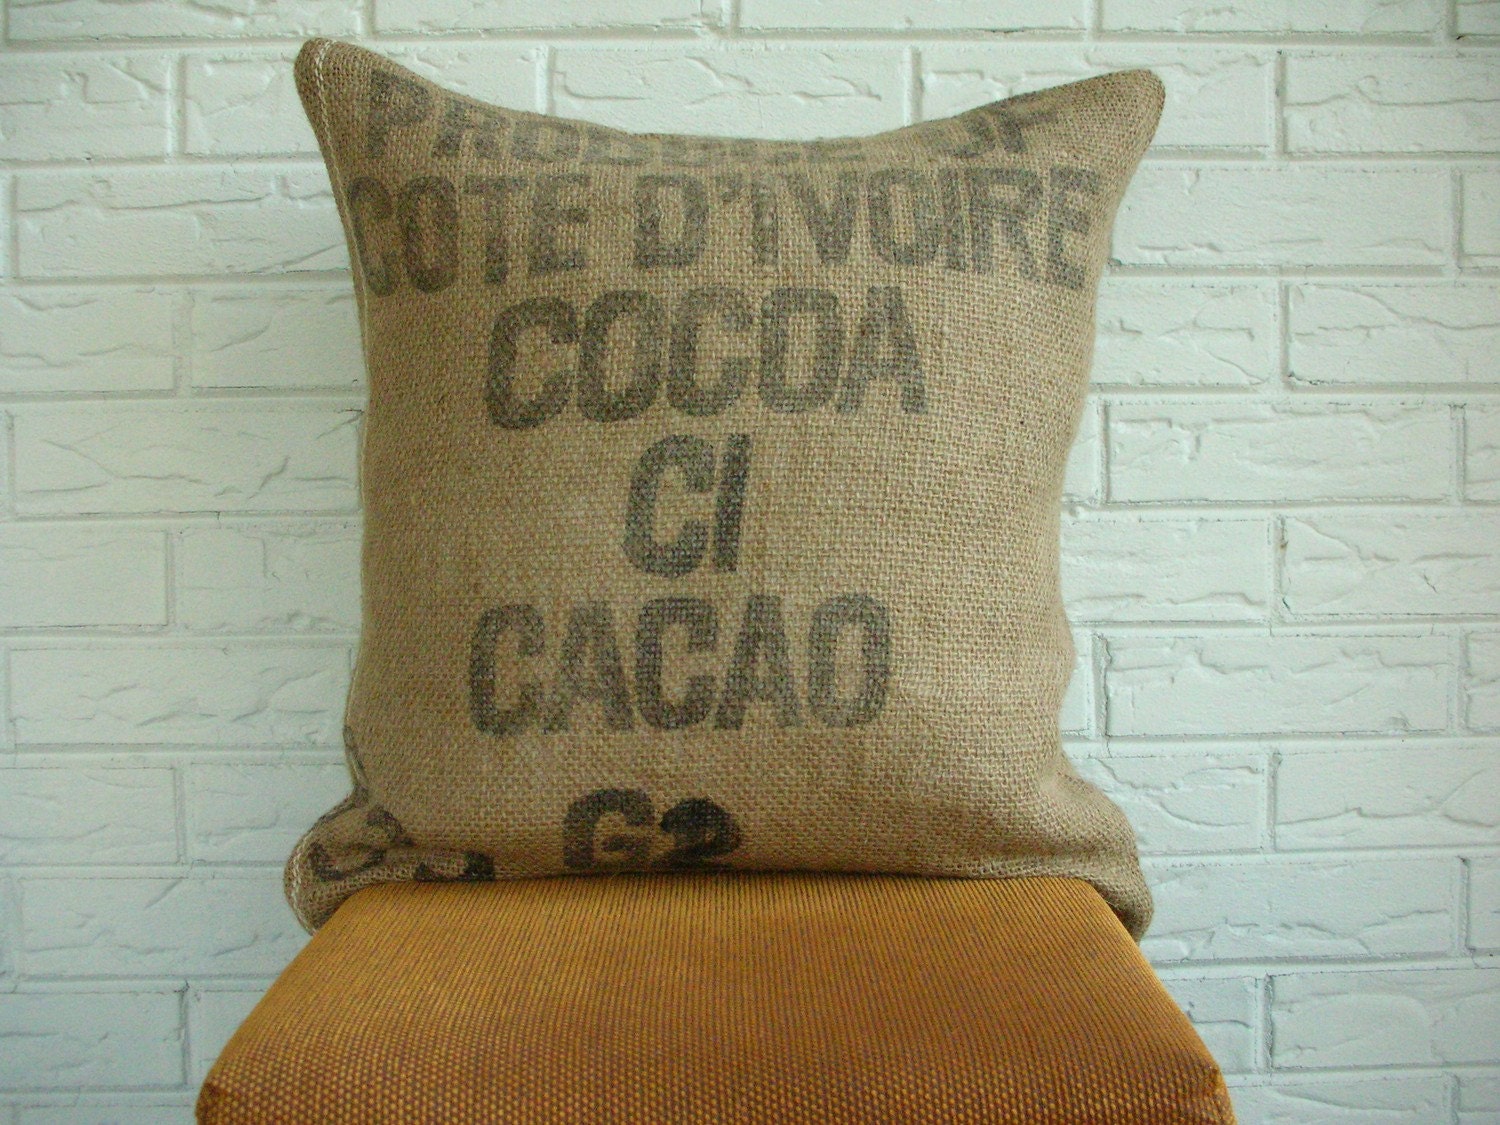 No. 1 Cote D'Ivoire Reclaimed Burlap Cocoa Sack Pillow Cover, 20